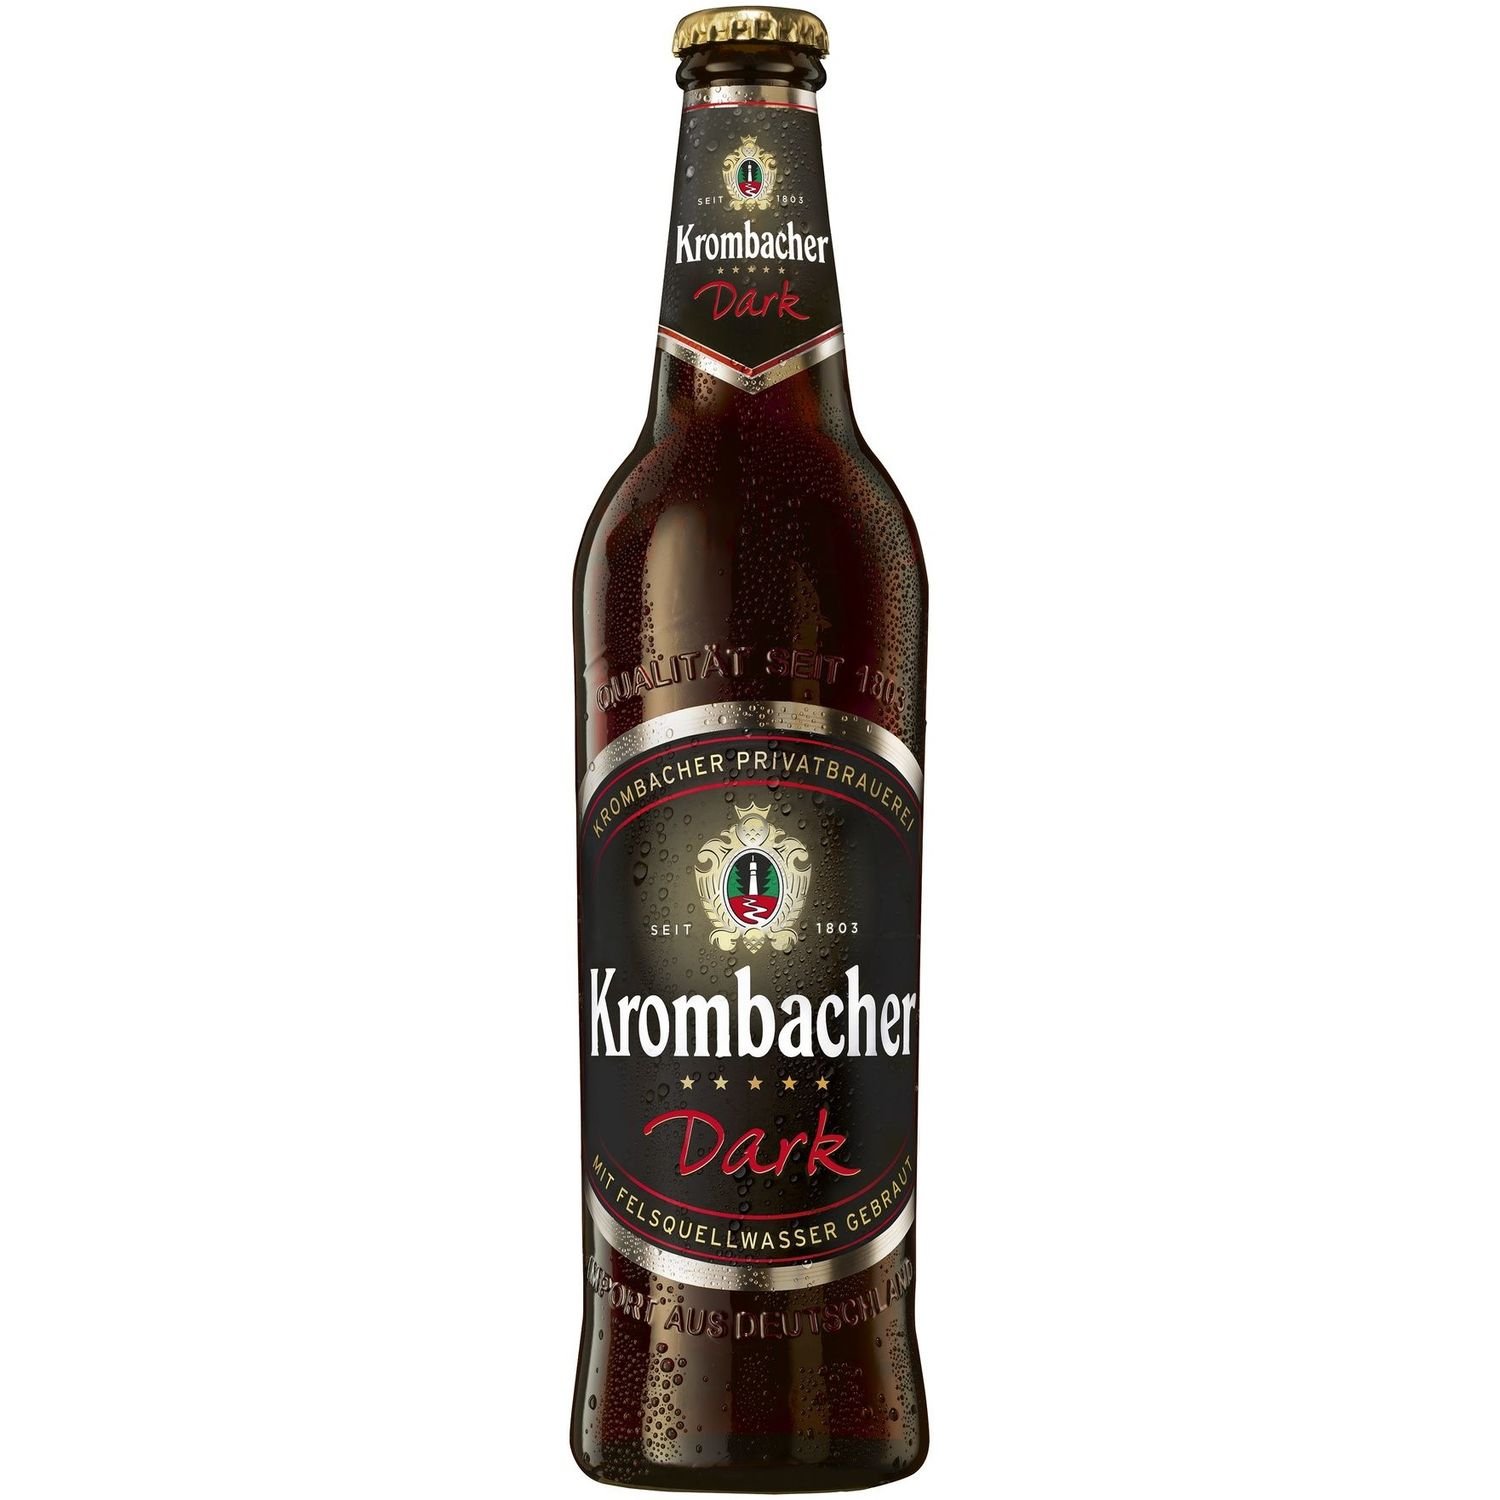 Пиво Krombacher Dark, темное, фильтрованное, 4,7%, 0,5 л - фото 1